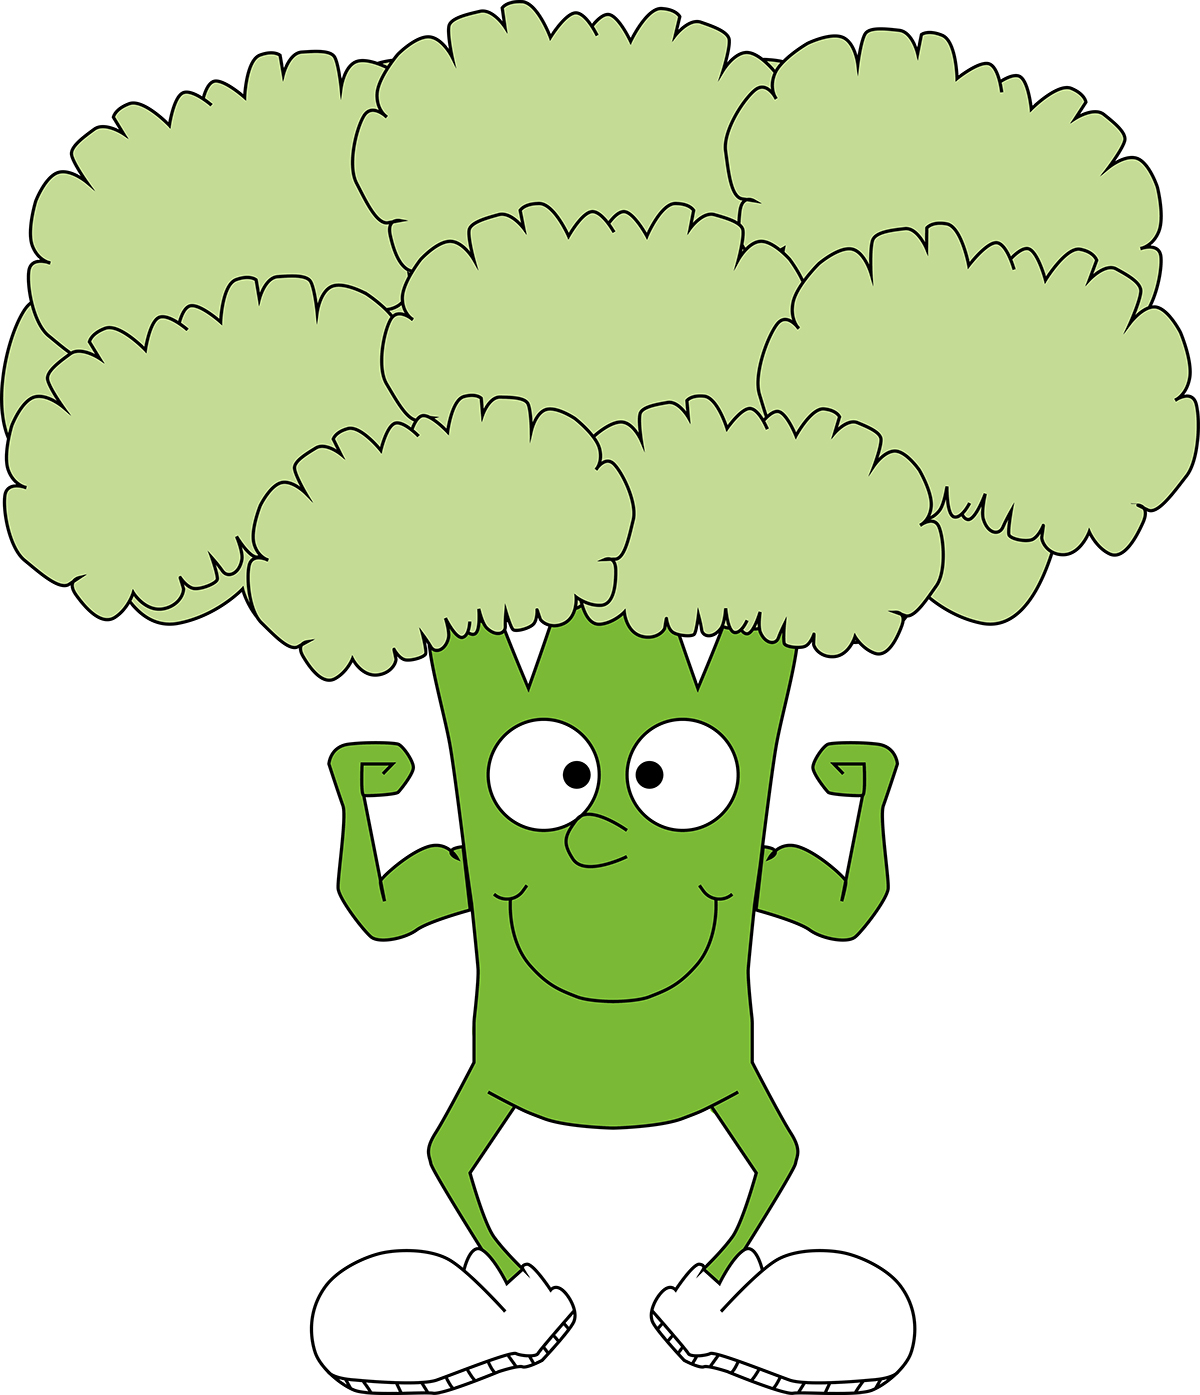 Eatclean vegetable broccoli healthyfood healthy detox logo diet veggies green sport